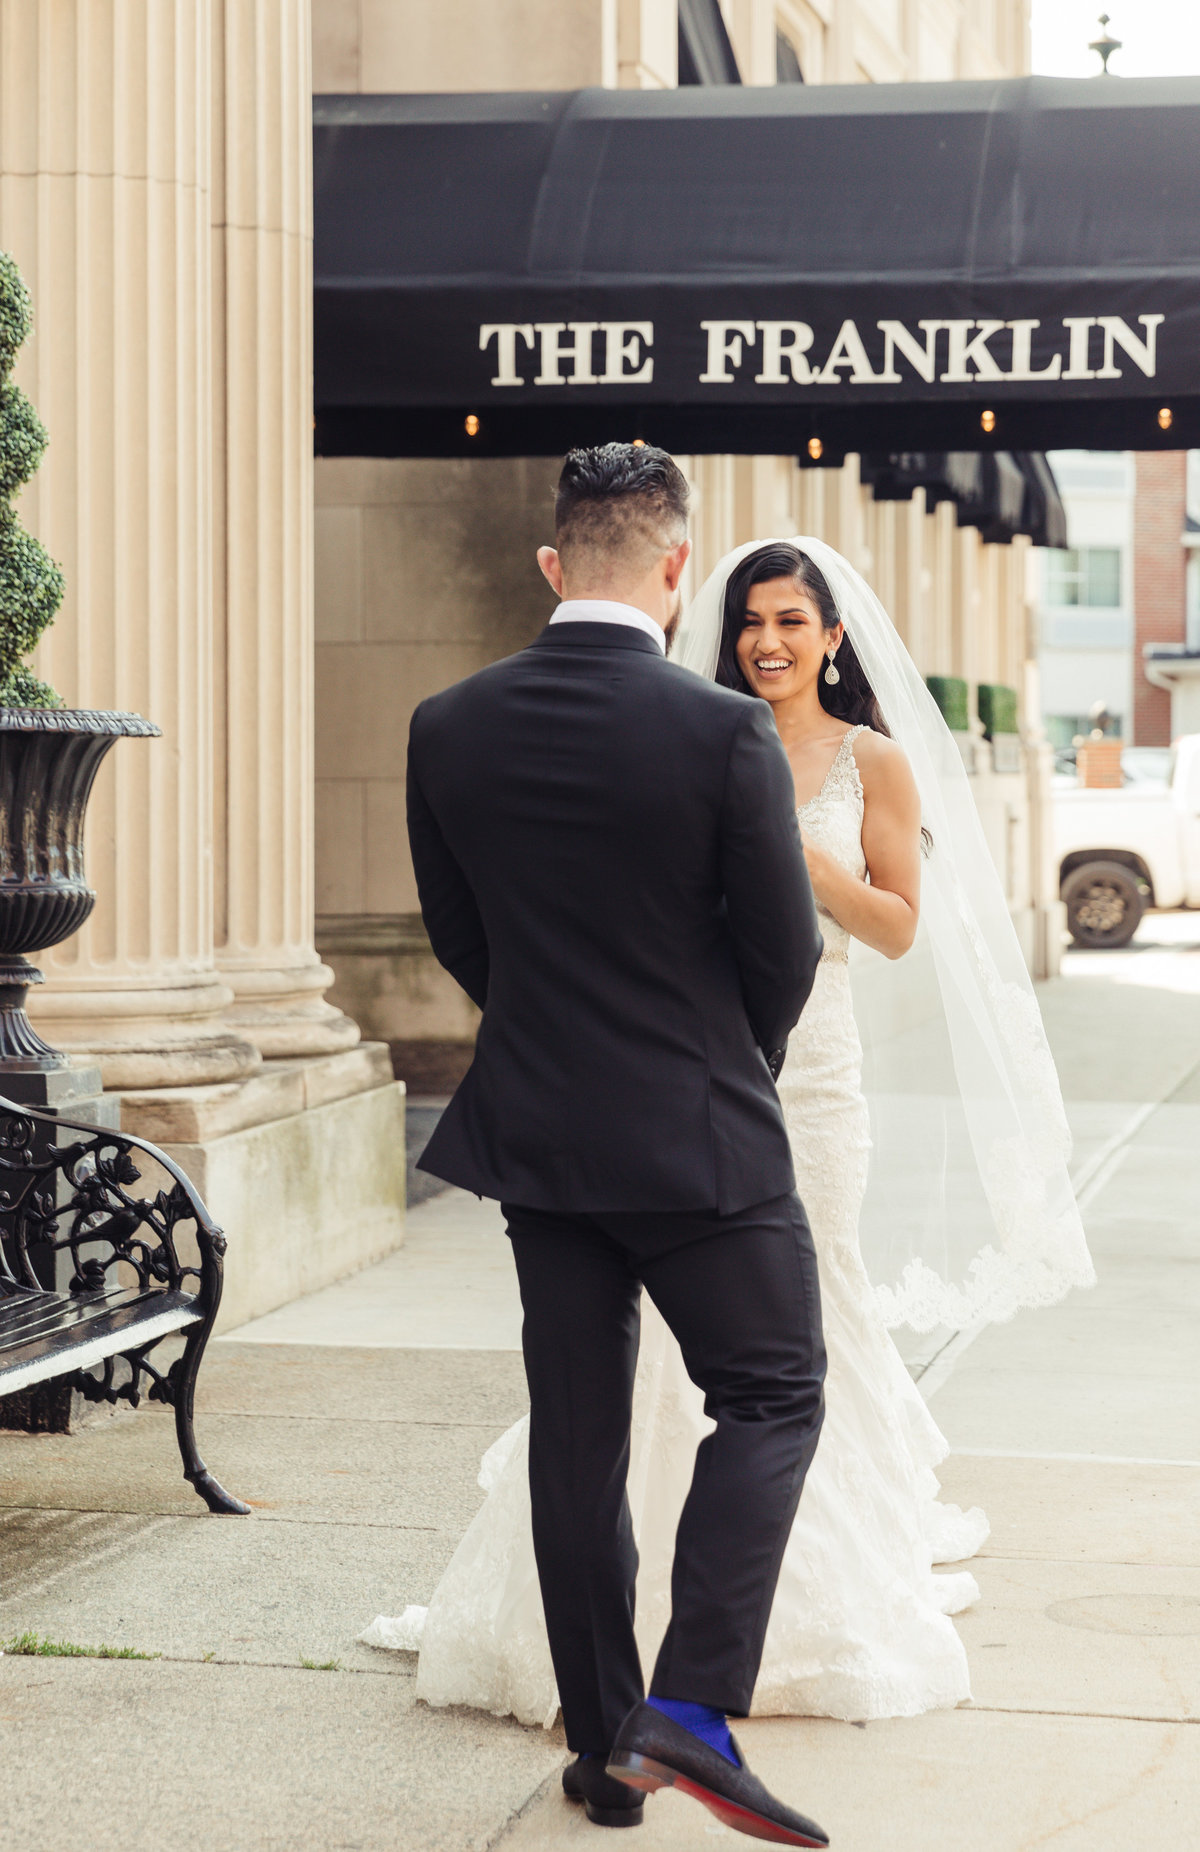 the-harris-co-wedding-photographer-franklin-plaza-troy-new-york-016